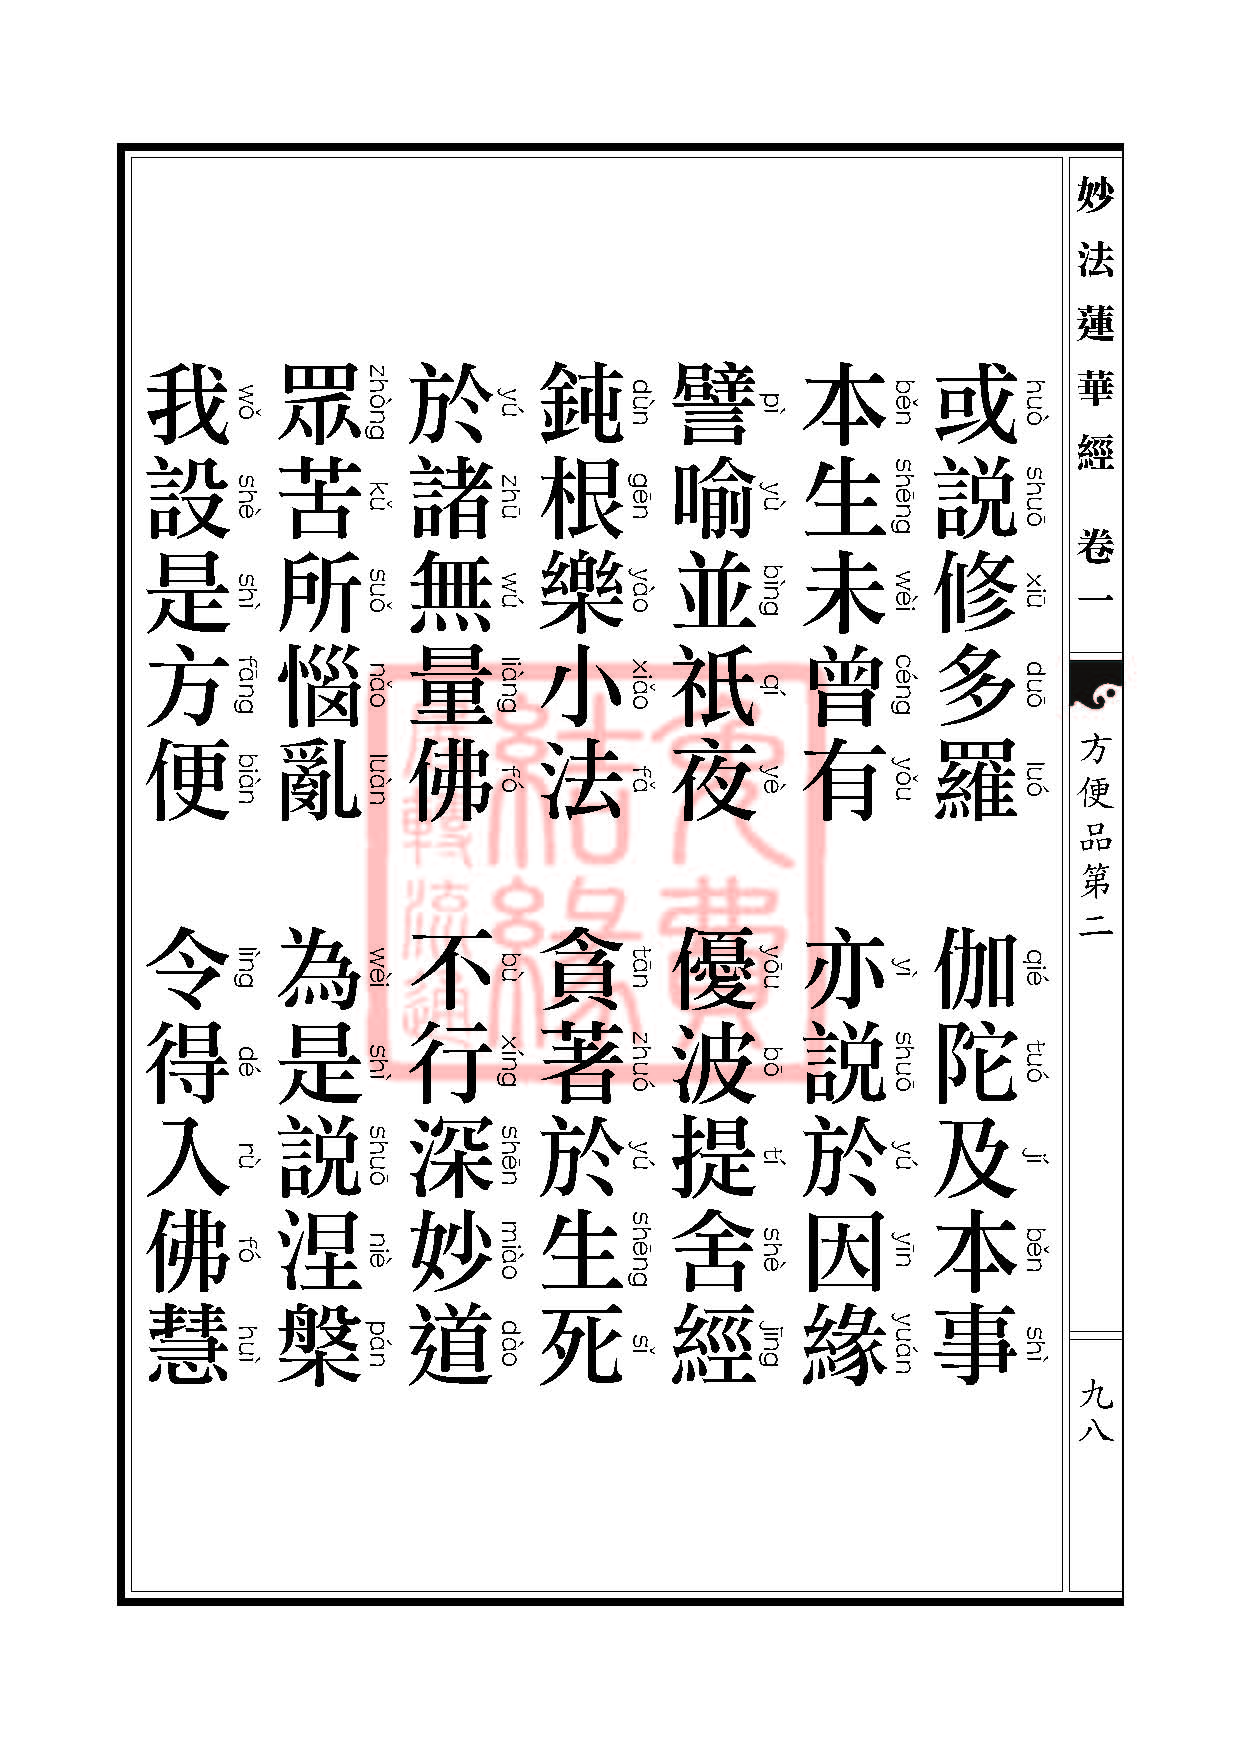 Book_FHJ_HK-A6-PY_Web_ҳ_098.jpg